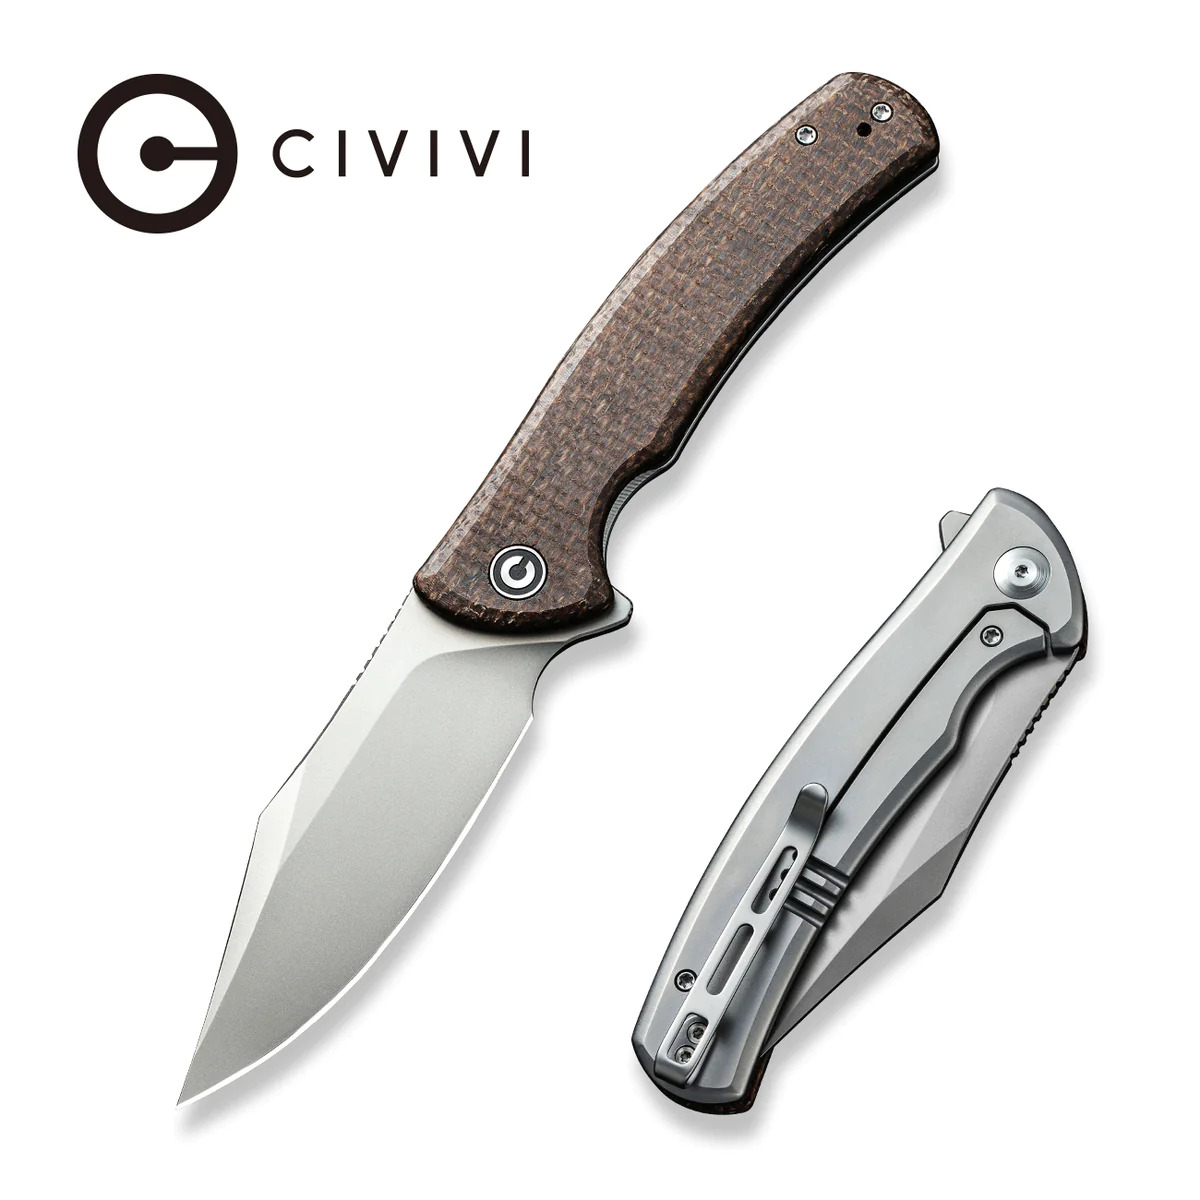 civivi-sinisys-presentation-side-with-steel-lock-side-handle-folding-knife-2.jpg